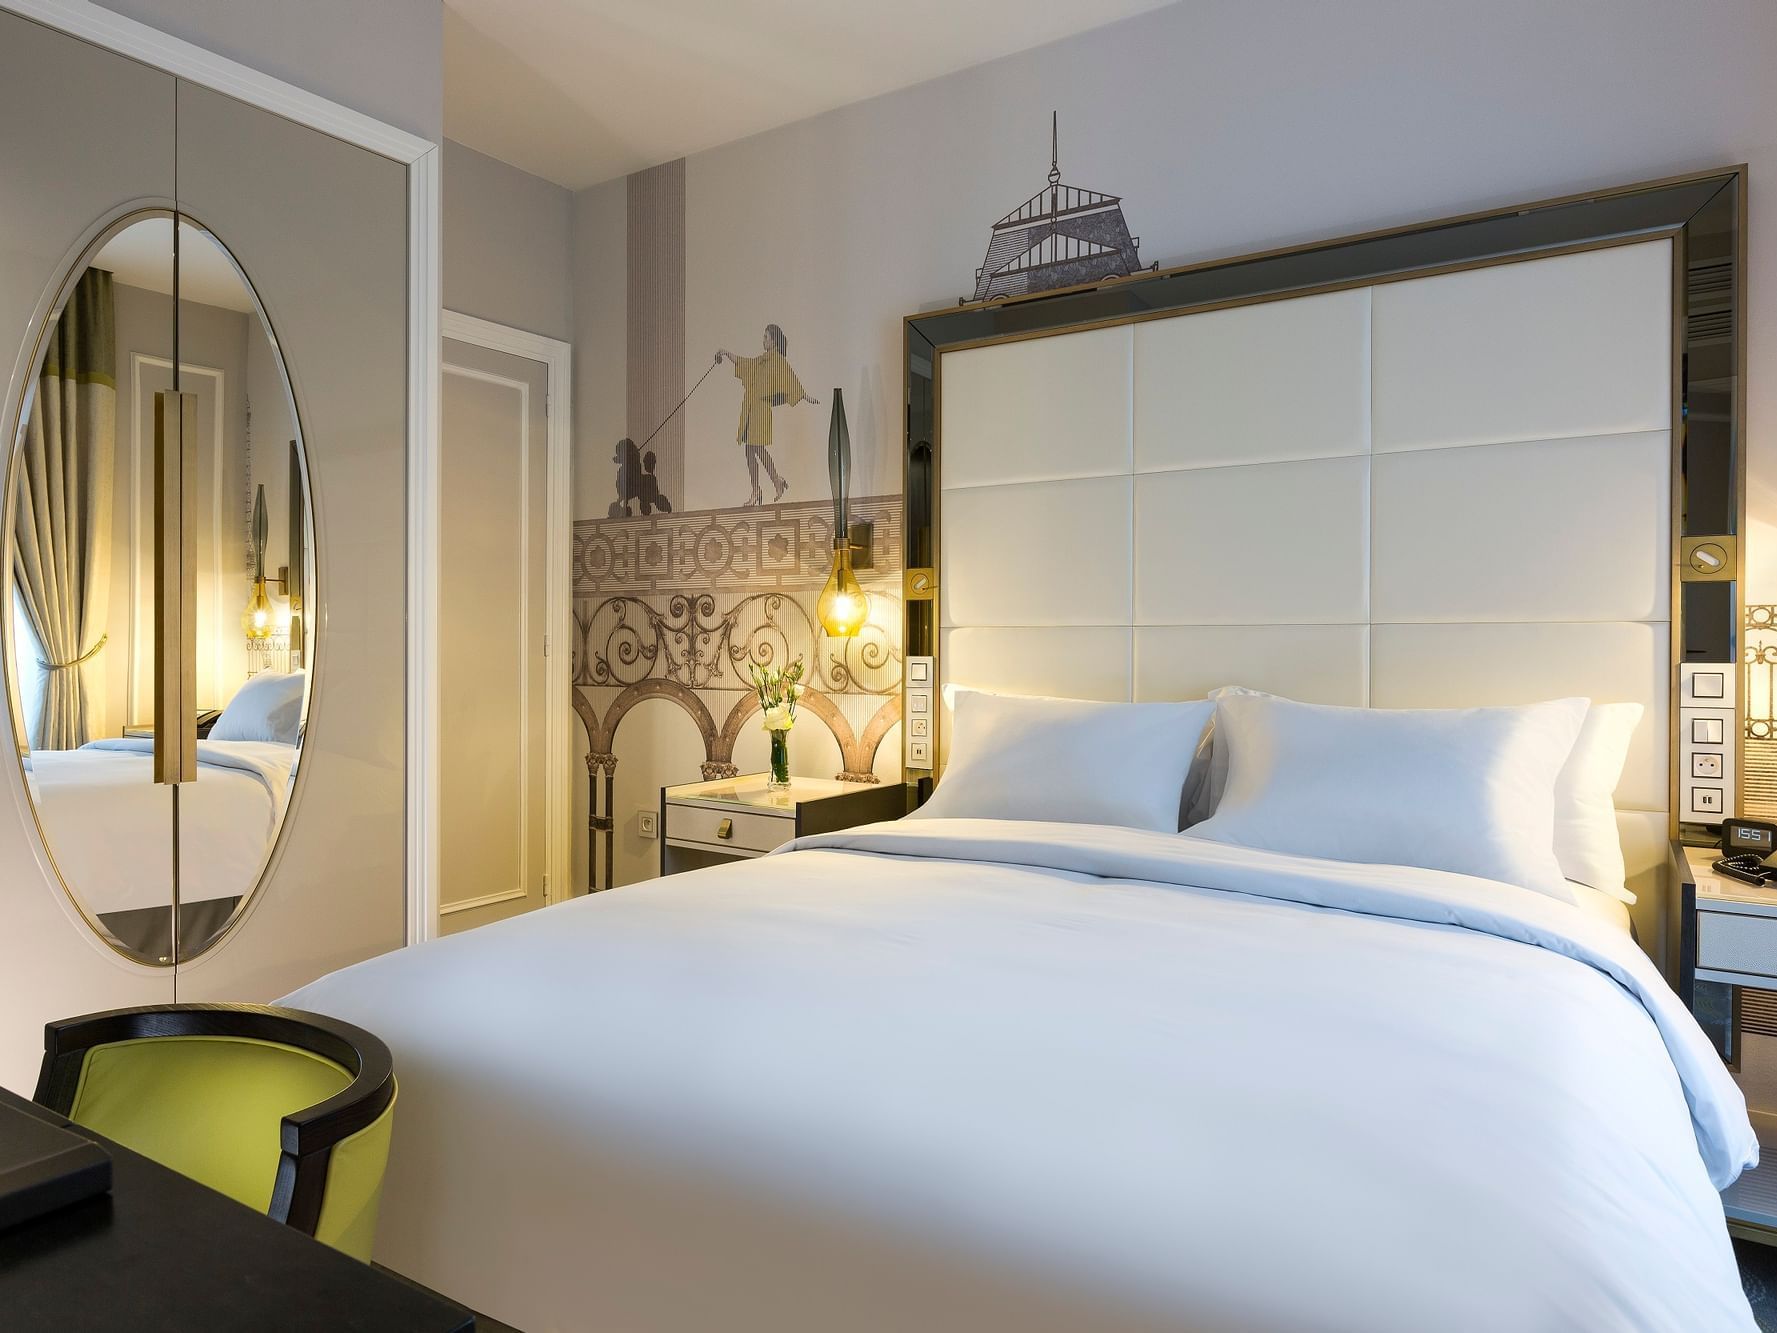 Bed & furniture in Superior Room at Hilton Paris Opera Hotel